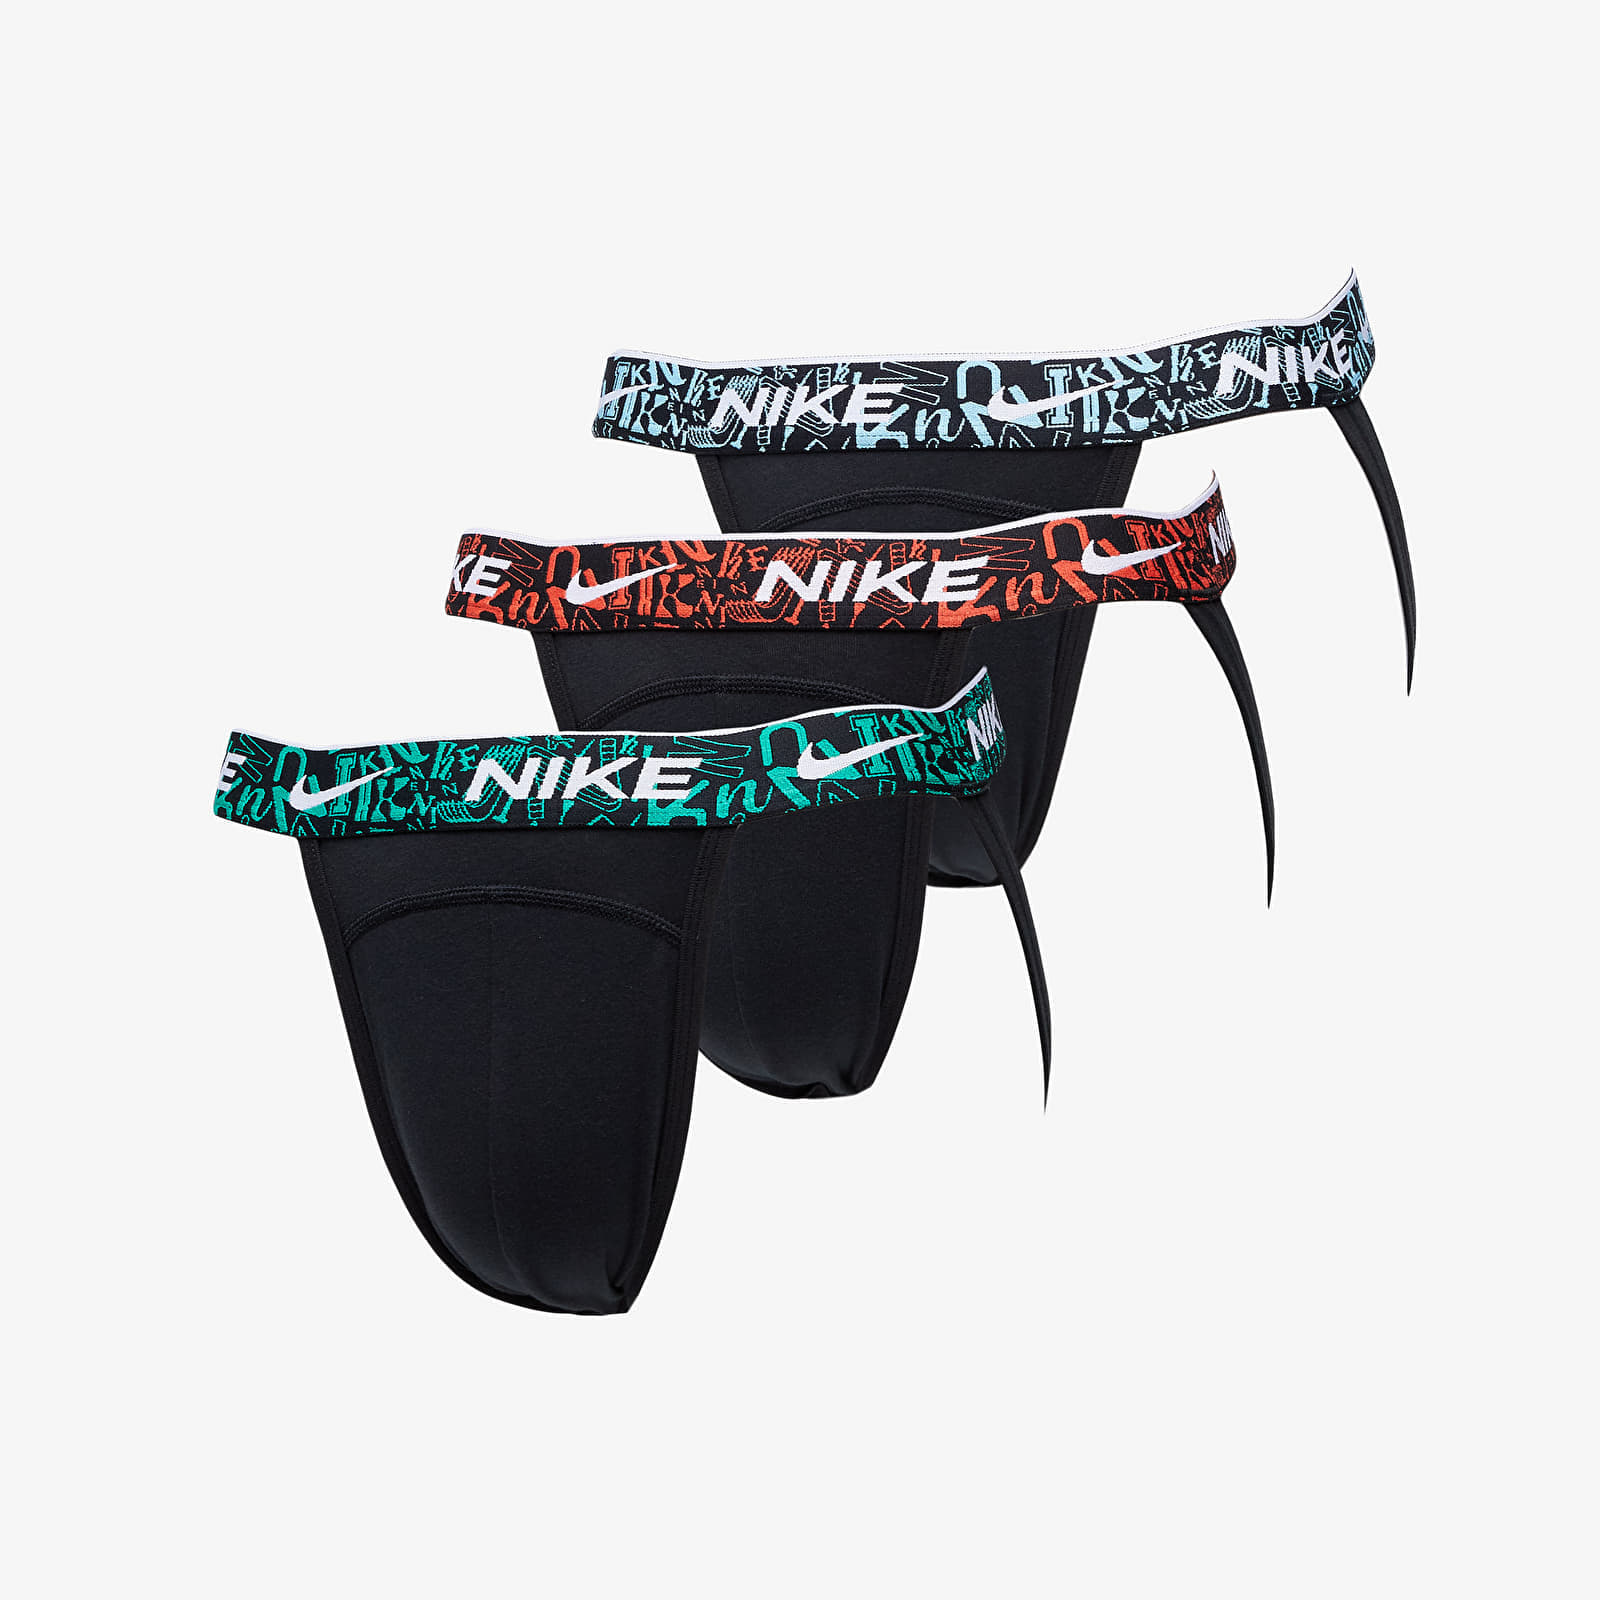 Nike Dri-FIT Everyday Cotton Stretch Jock Strap 3-Pack Multicolor